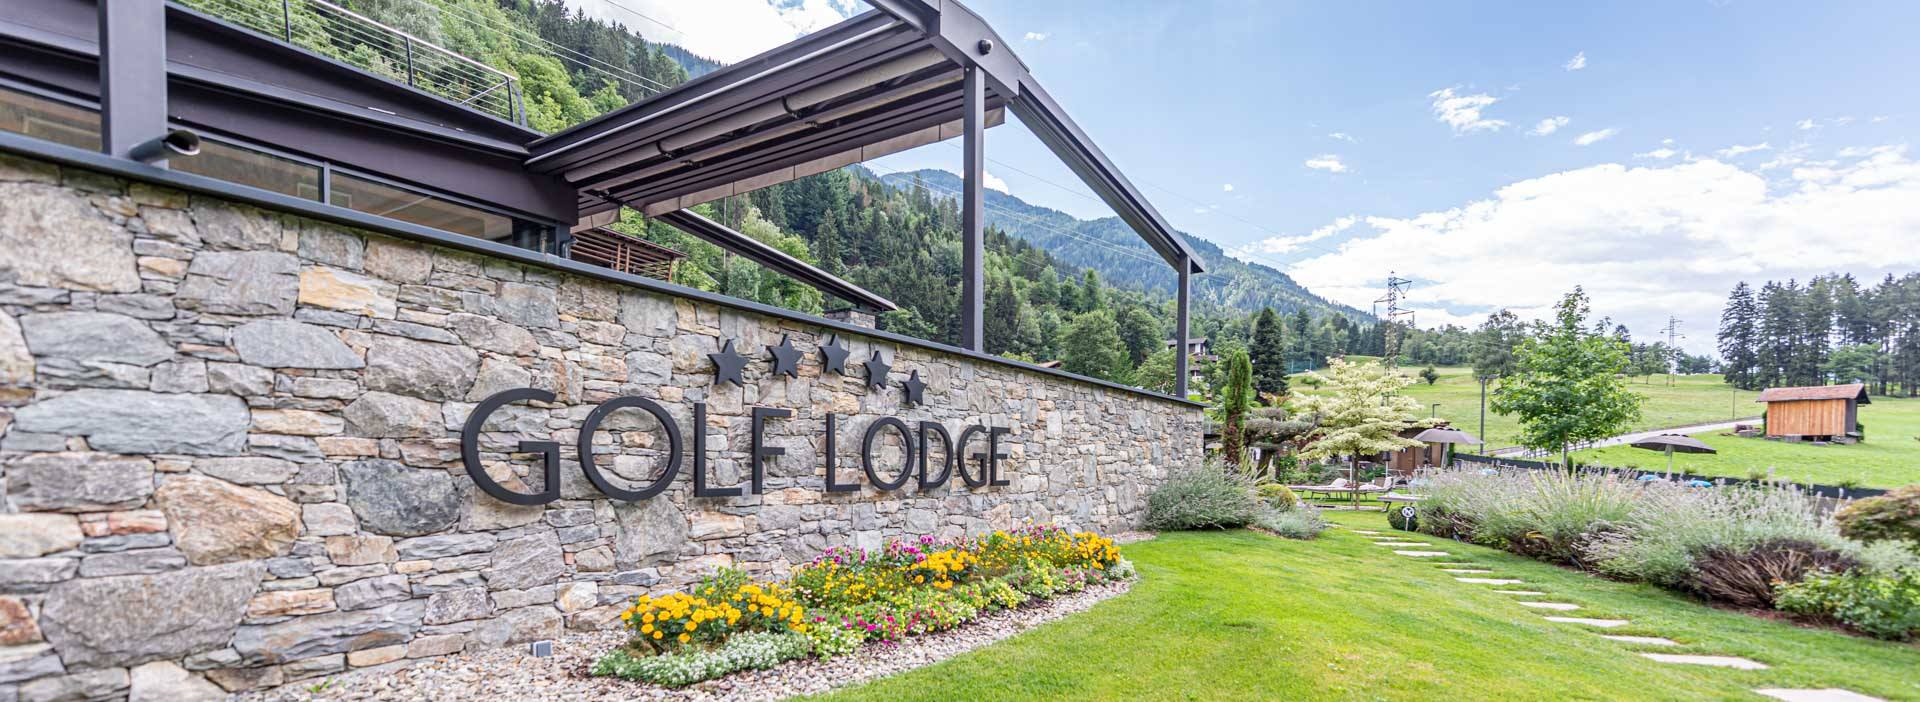 Golf Lodge Andreus Resorts